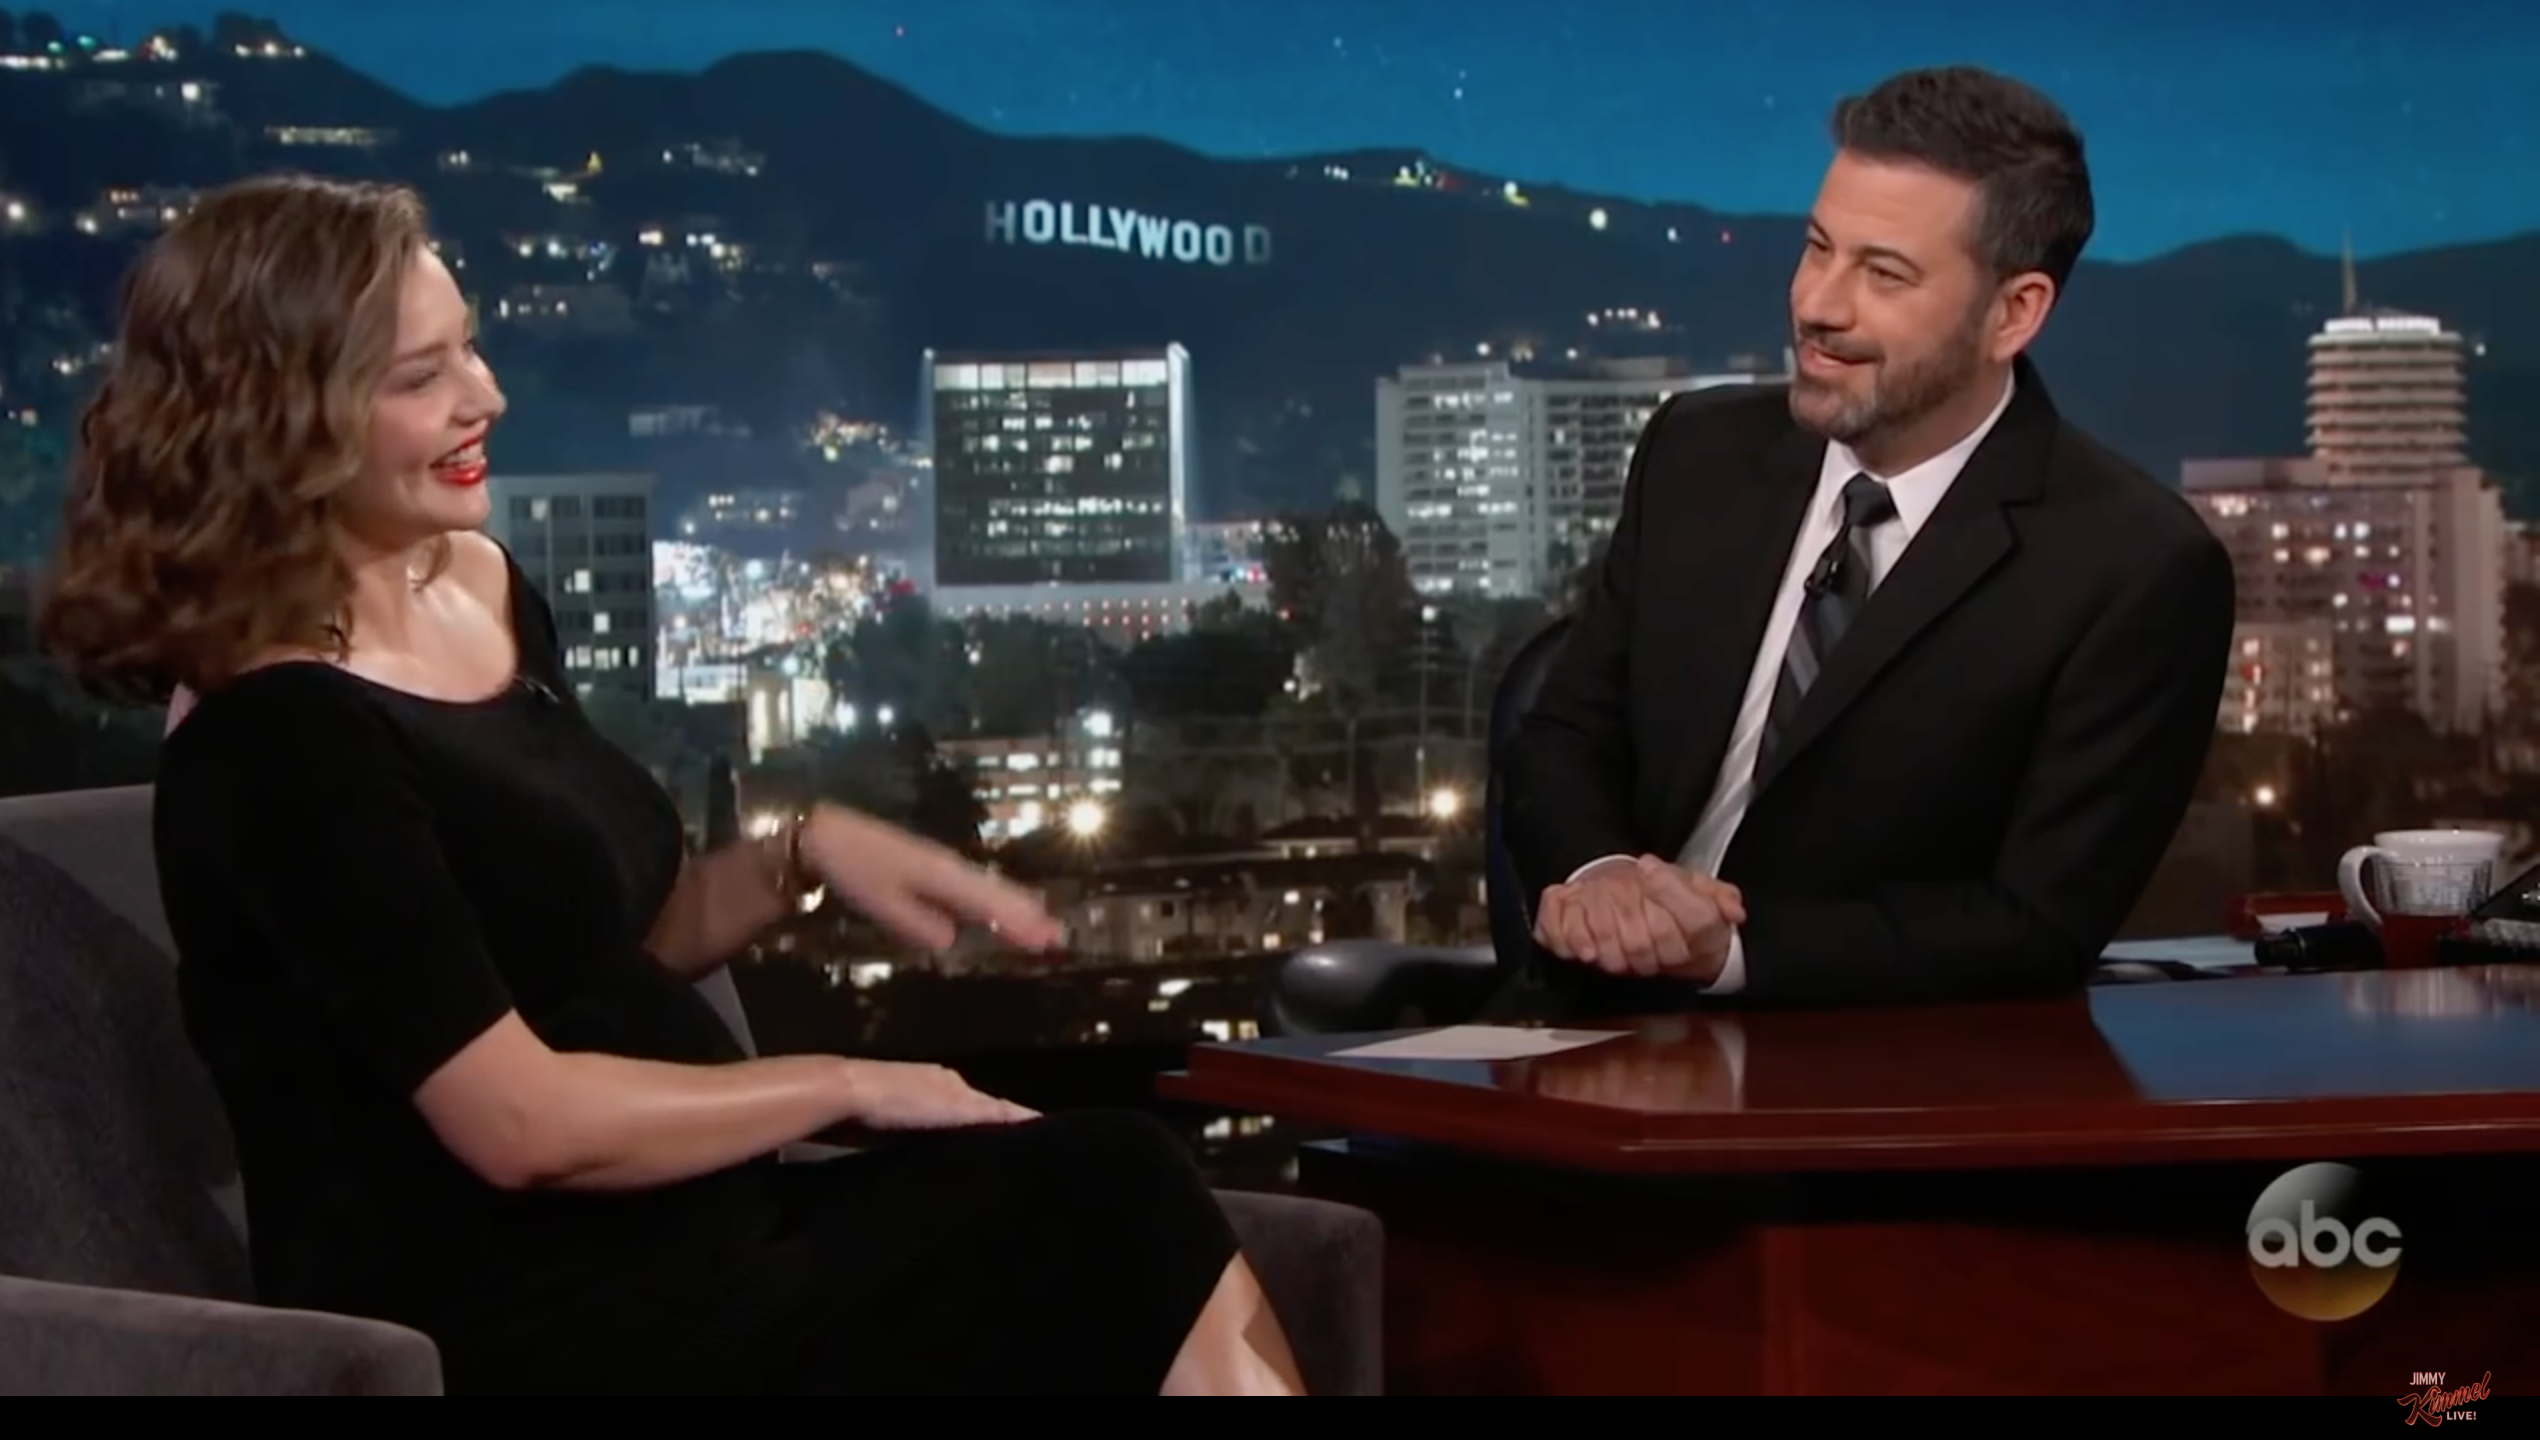 Miranda Kerr and Jimmy Kimmel